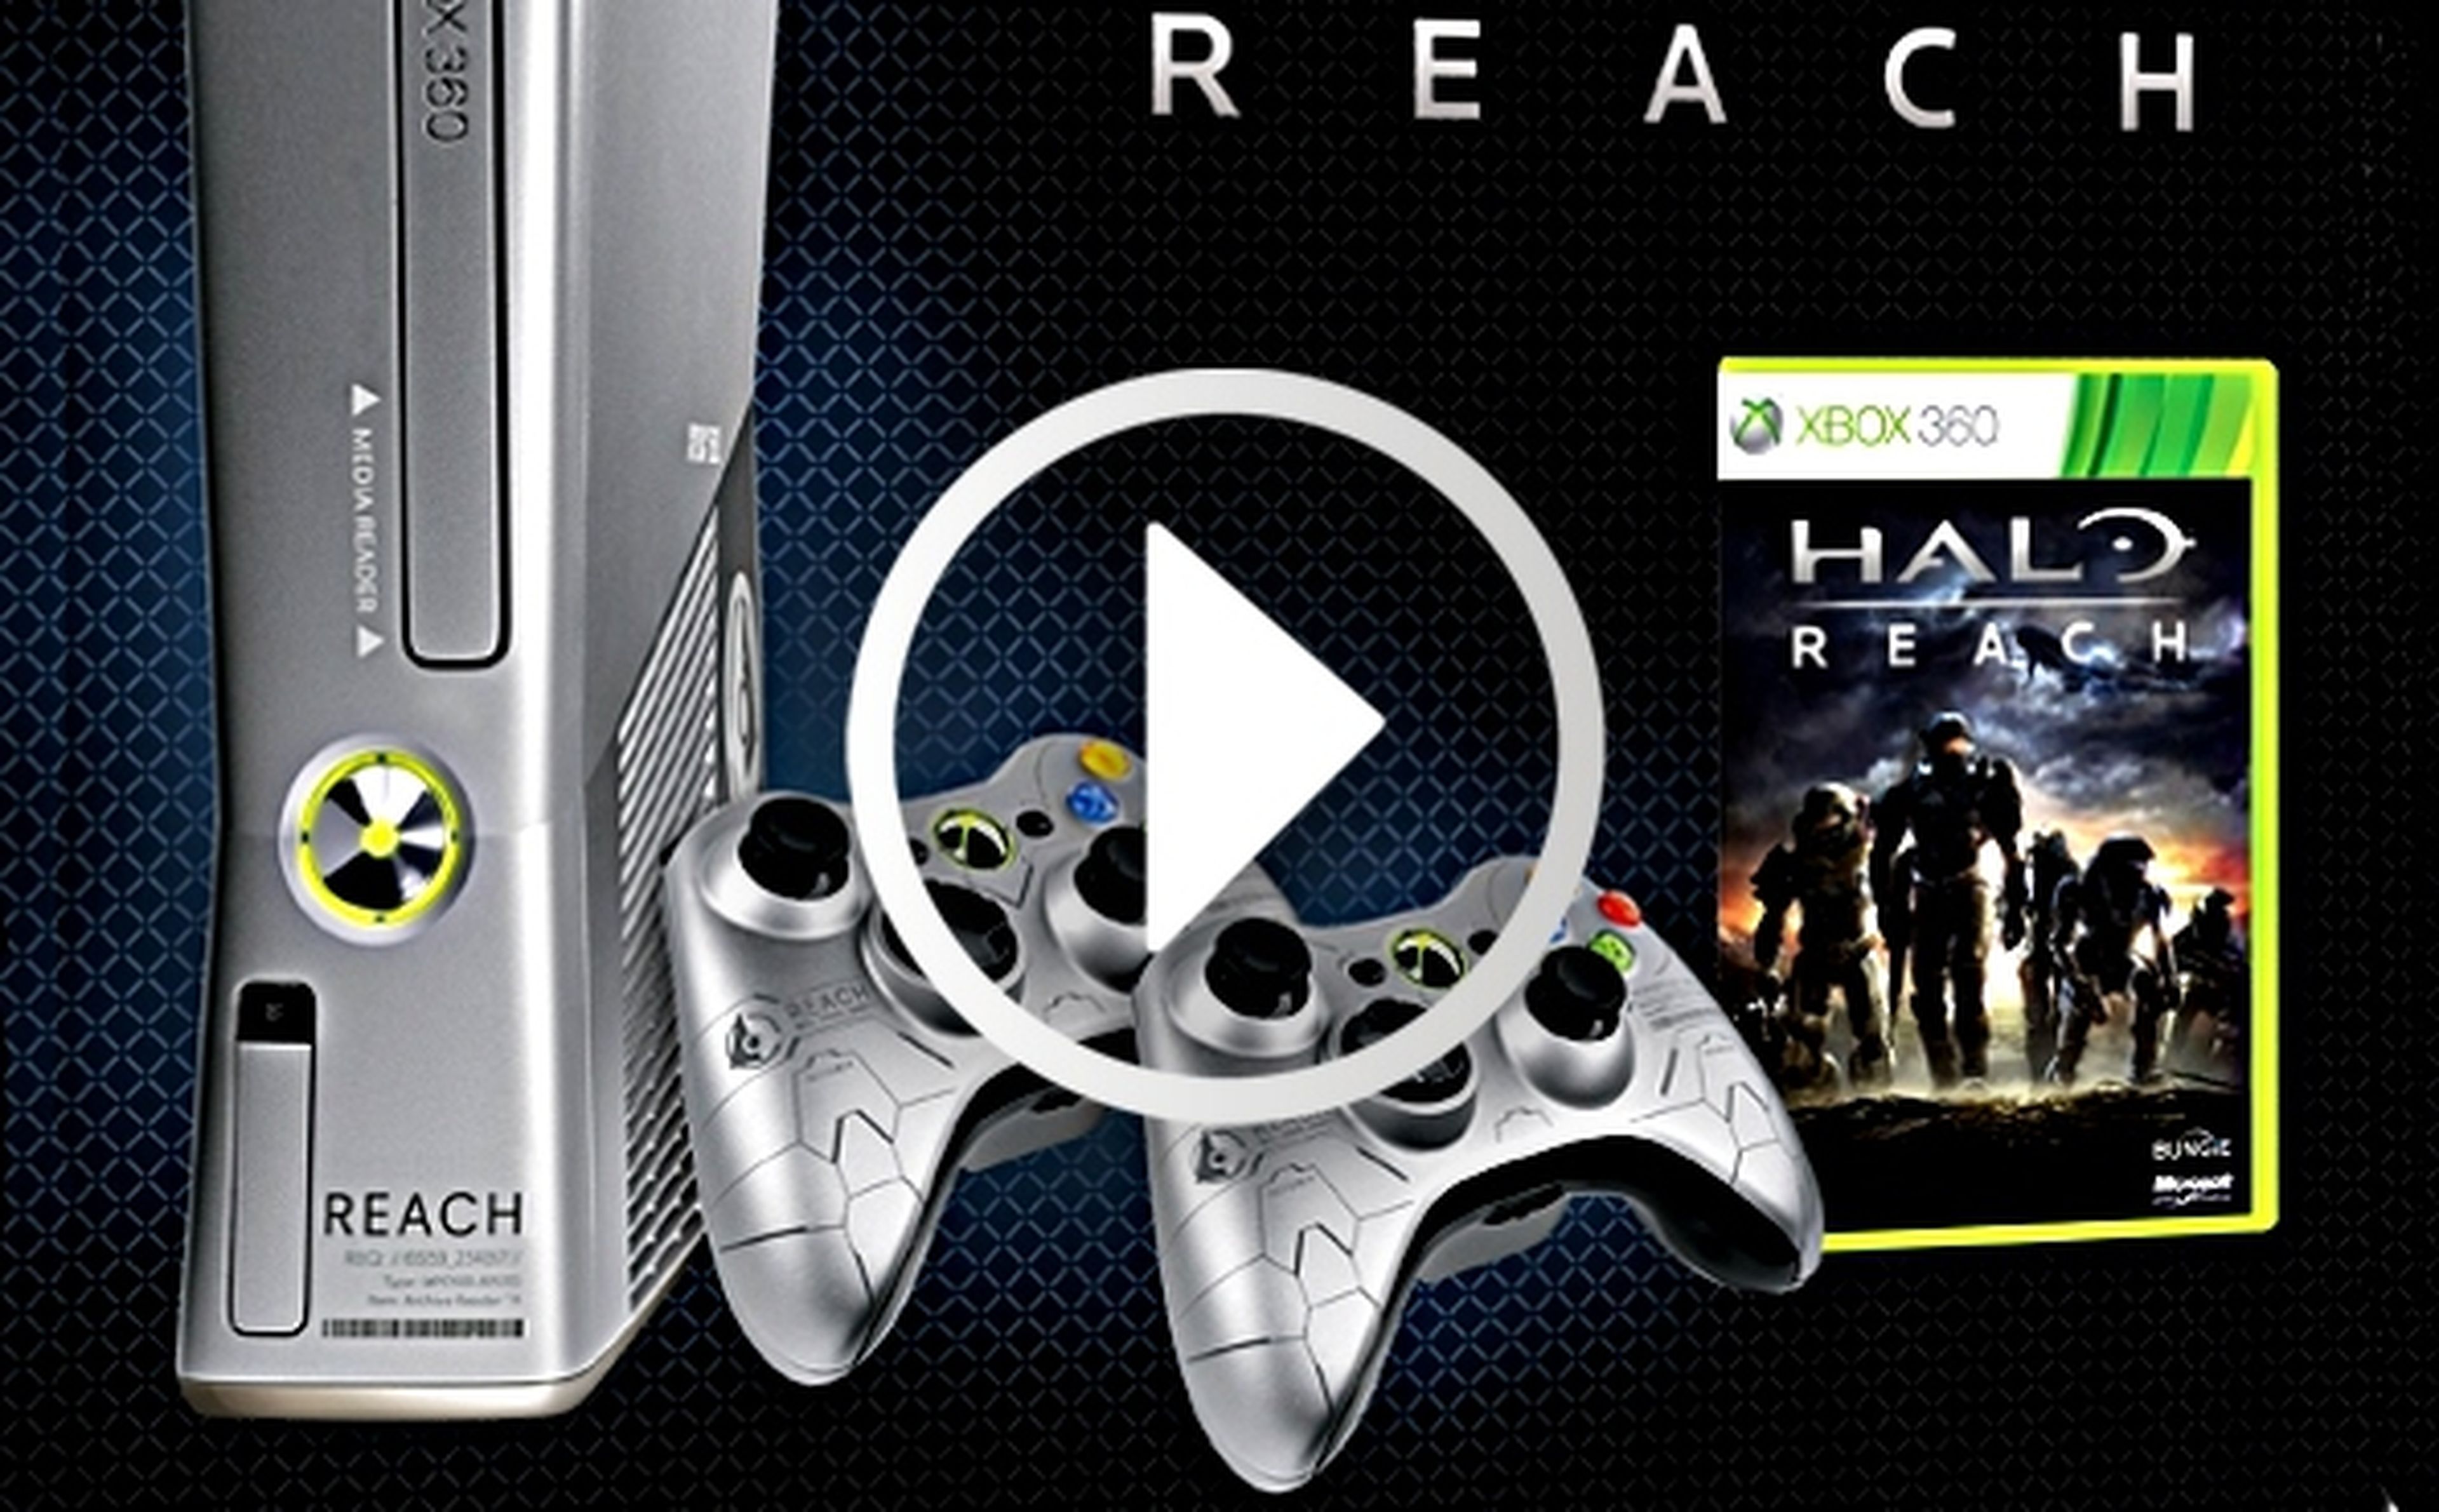 Xbox 360 especial Halo Reach